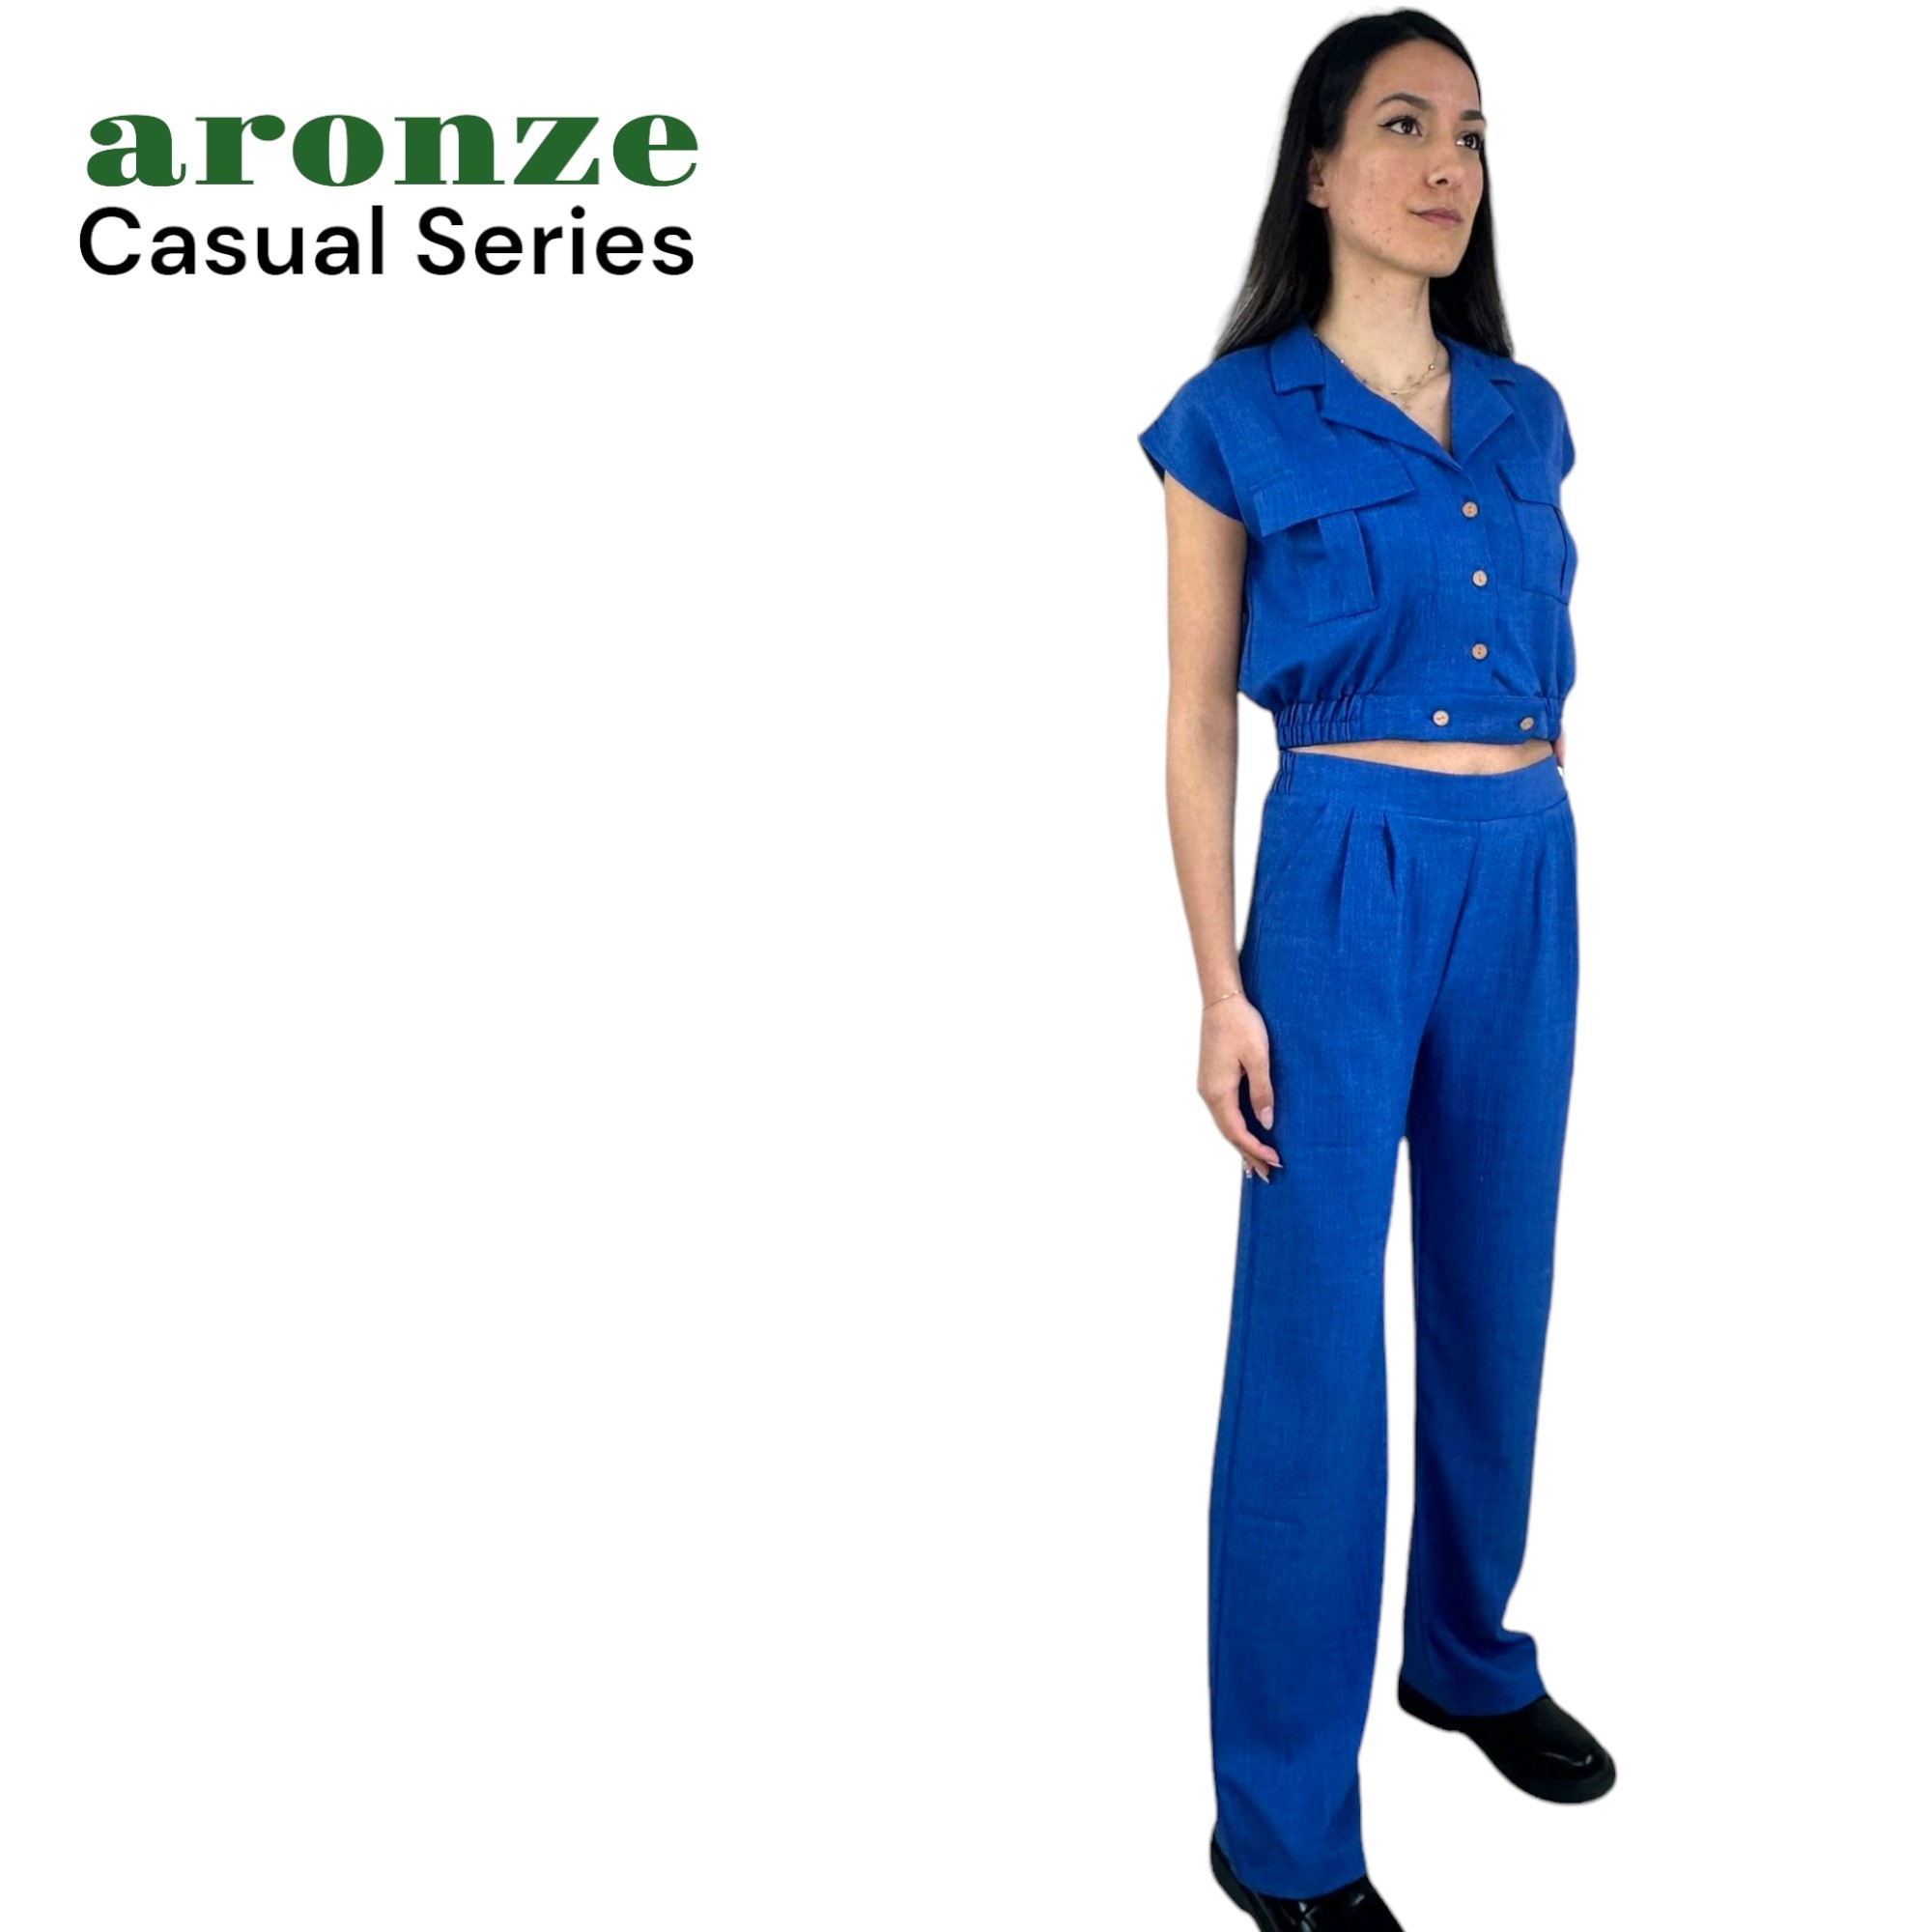 Aronze Casual Series %100 Organik Türk Pamuğu Crop Pantolon Mavi Renk Takım